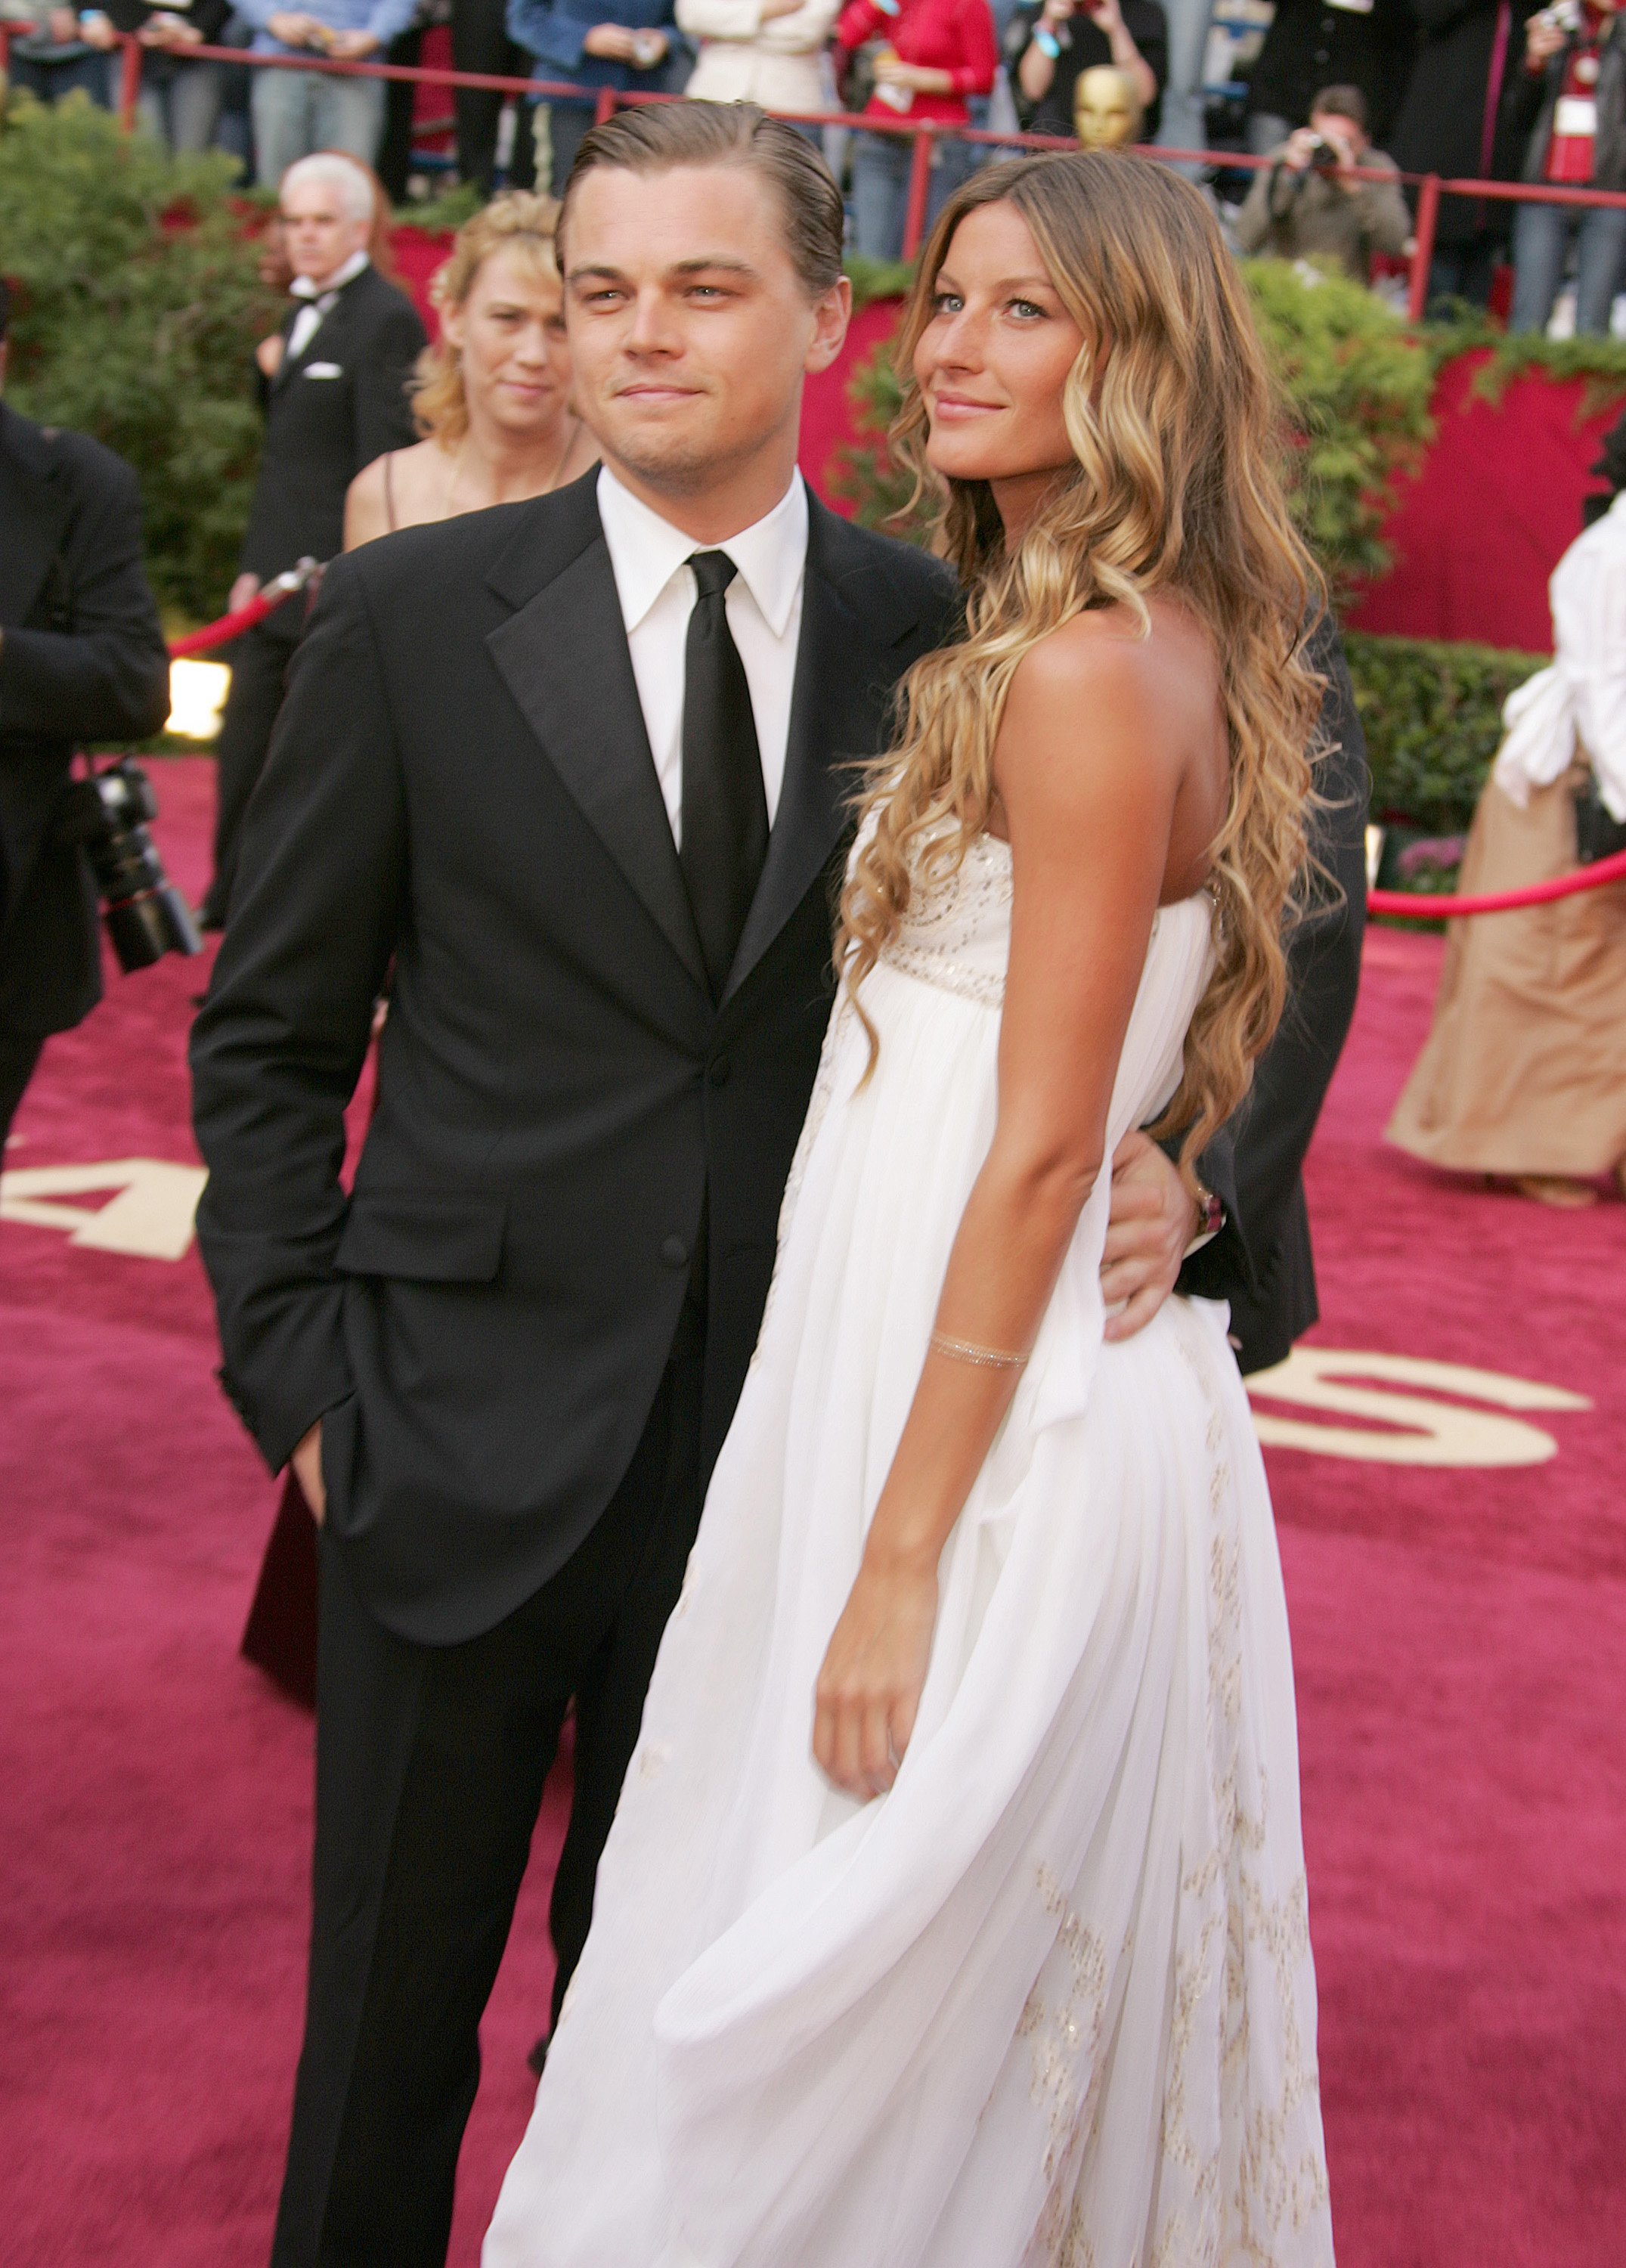 Leonardo DiCaprio and Gisele Bundchen attend the 77th Annual Academy Awards